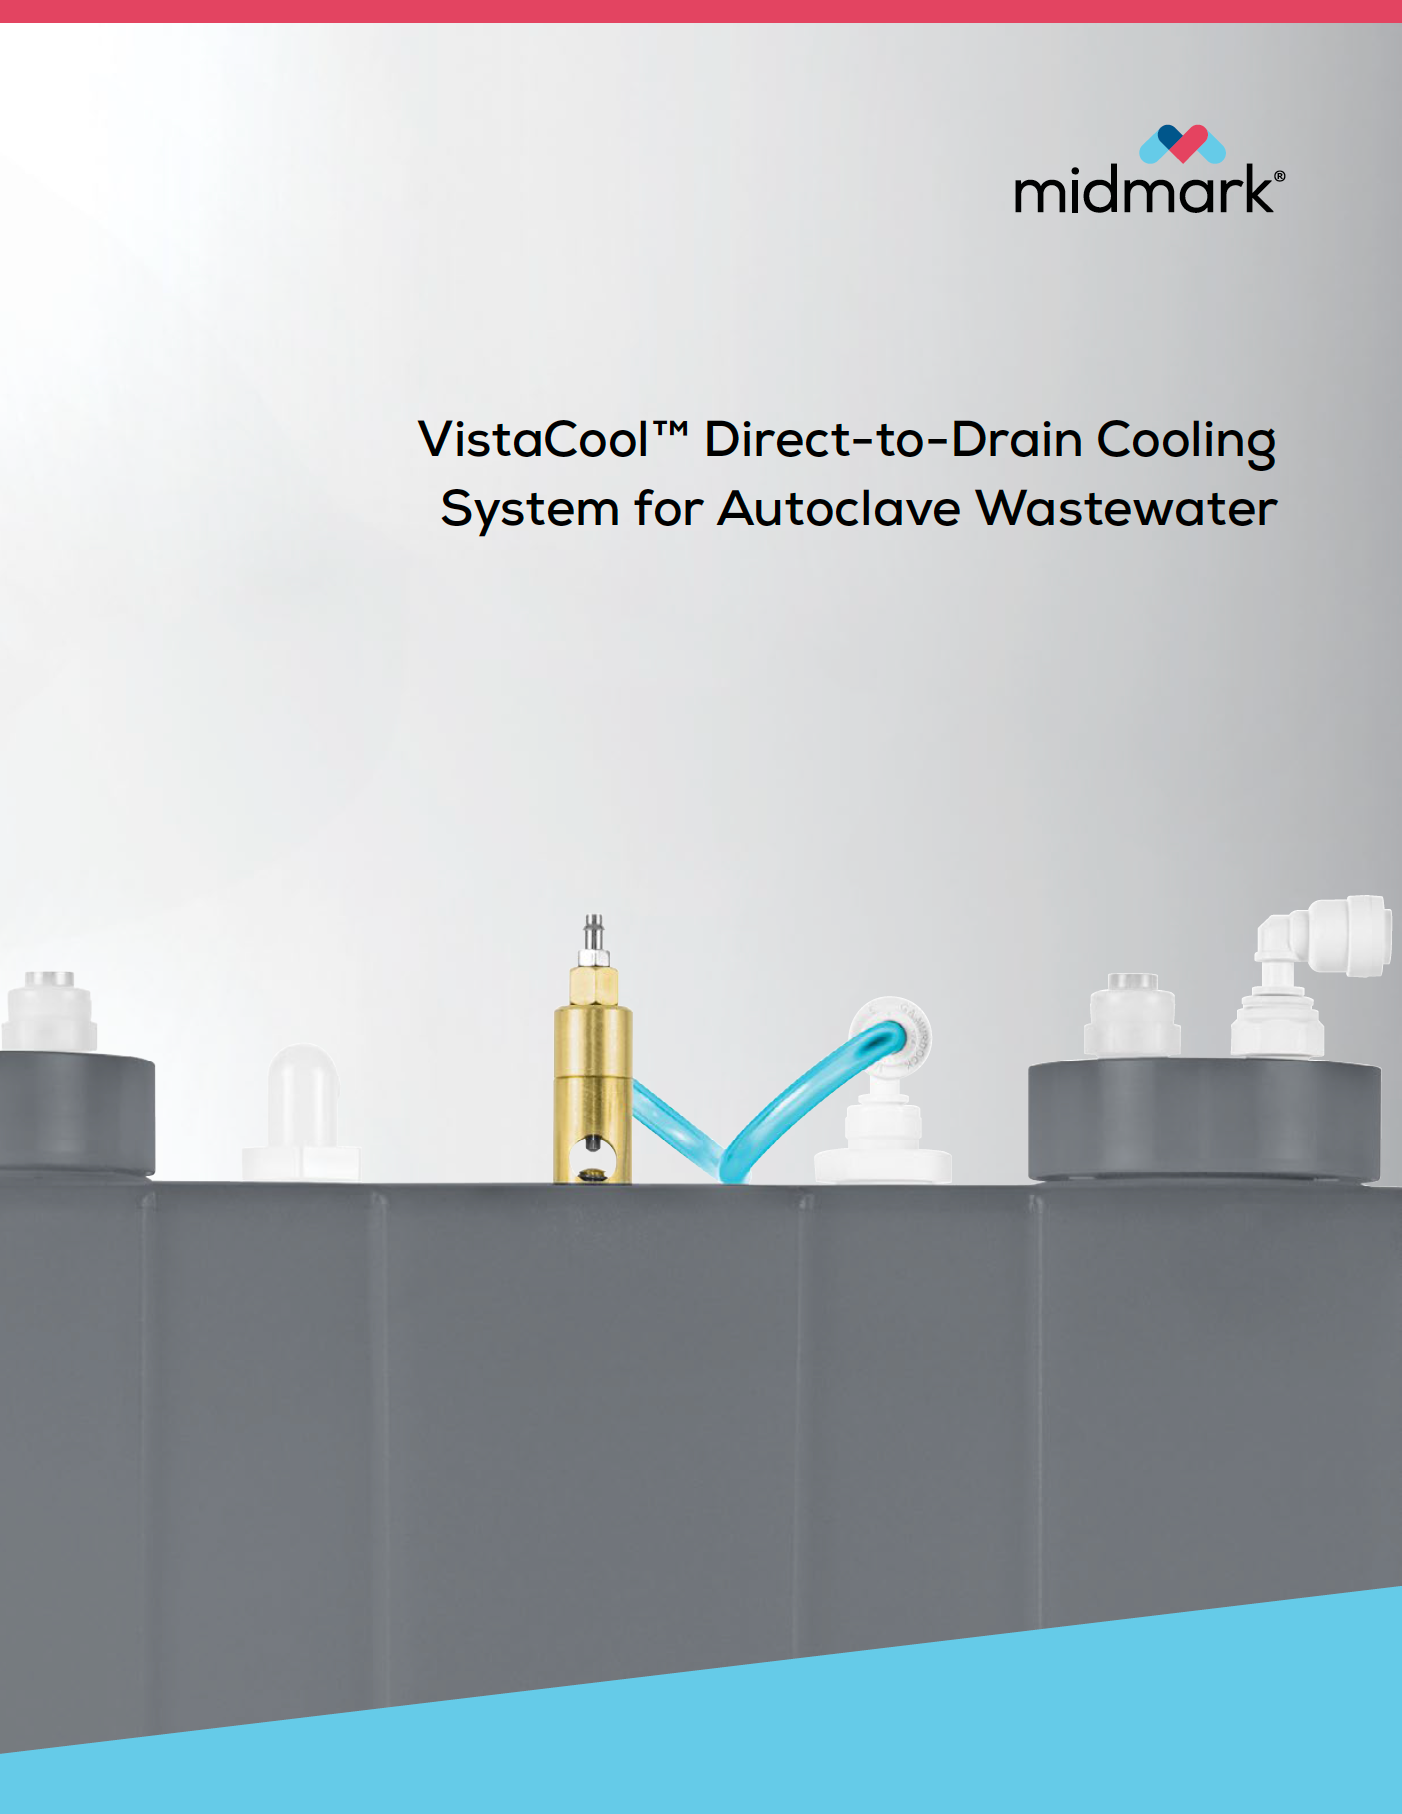 Midmark VistaCool Direct to Drain